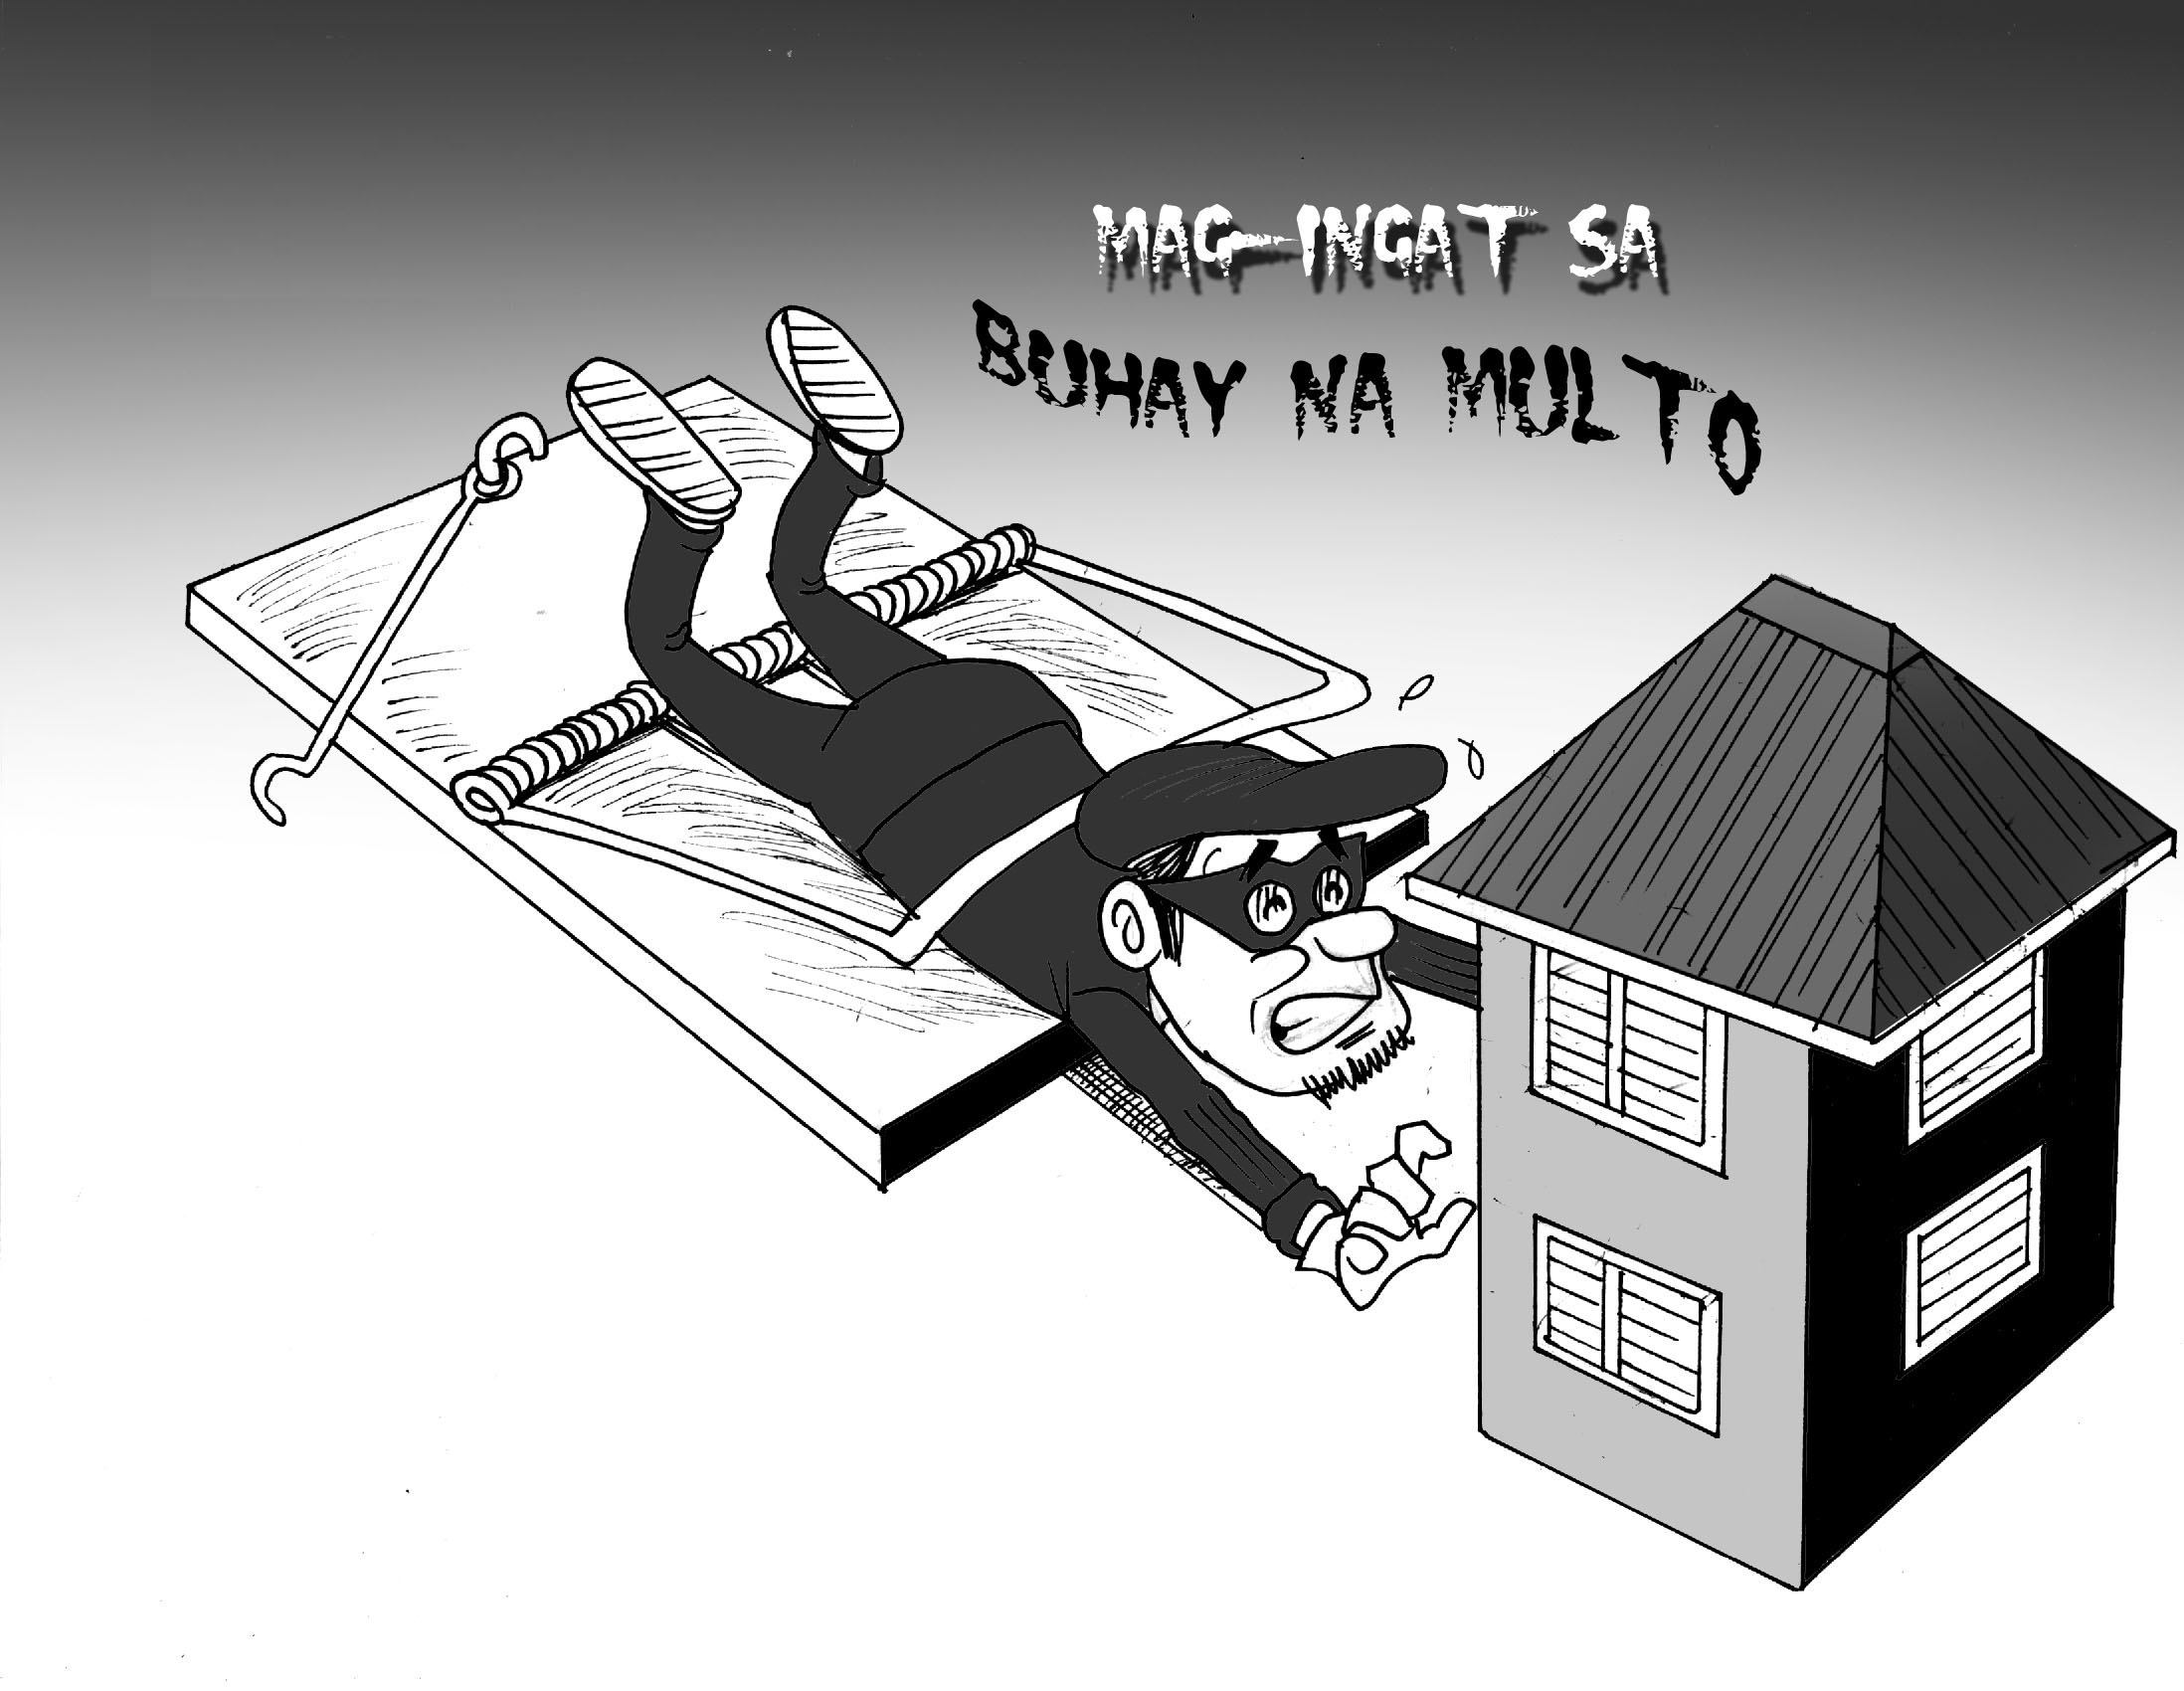 All Saints Day in Philippines editorial cartoon by bladimer usi | bladimer